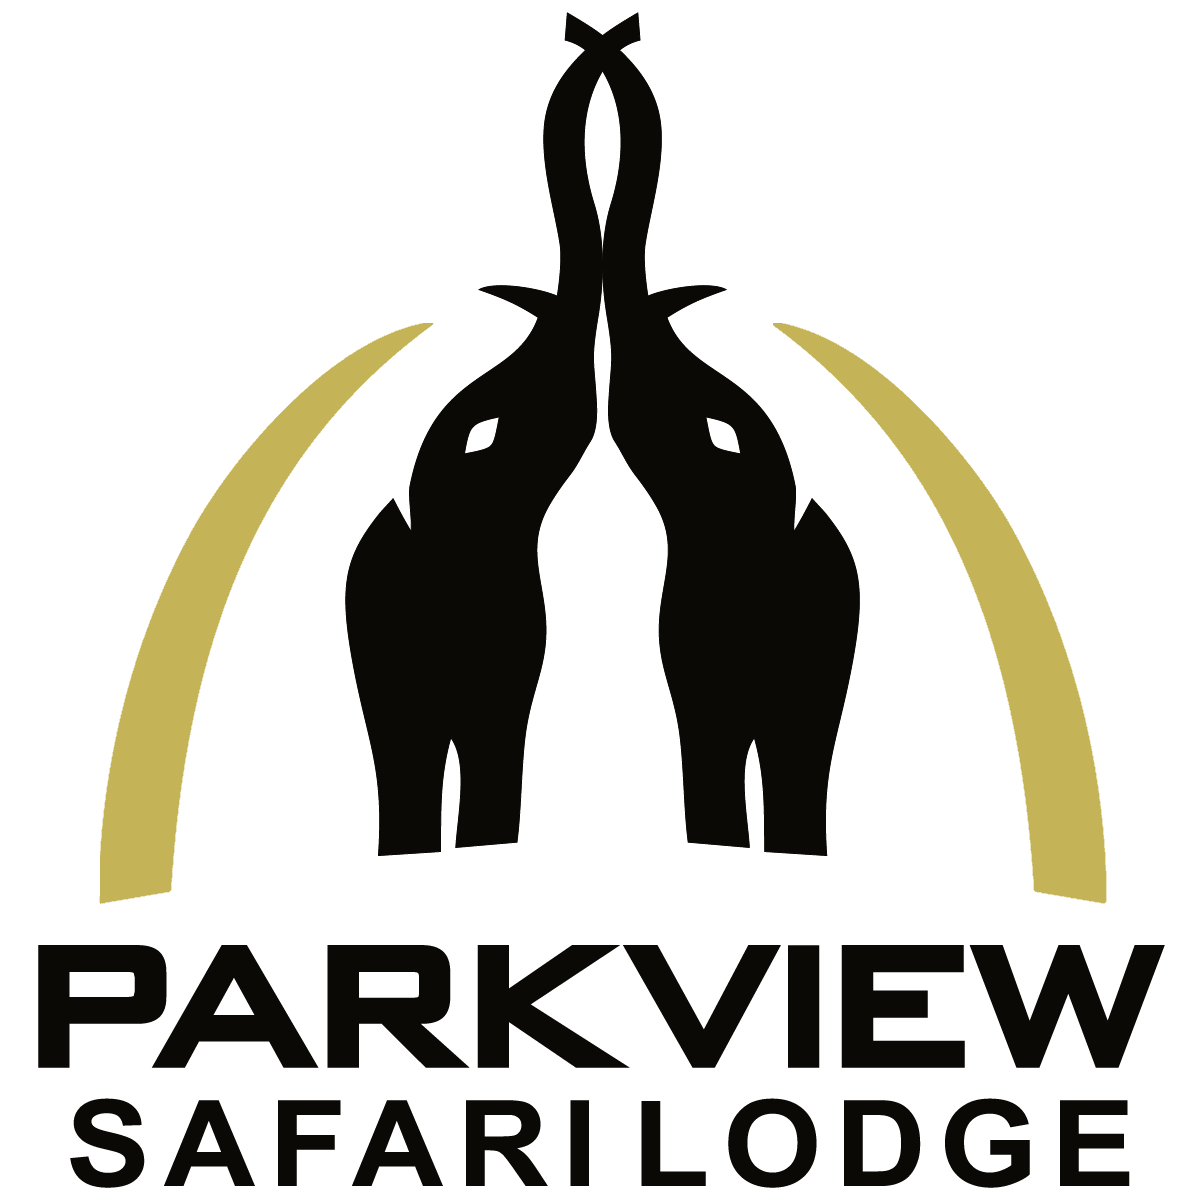 Parkview Safari Lodge